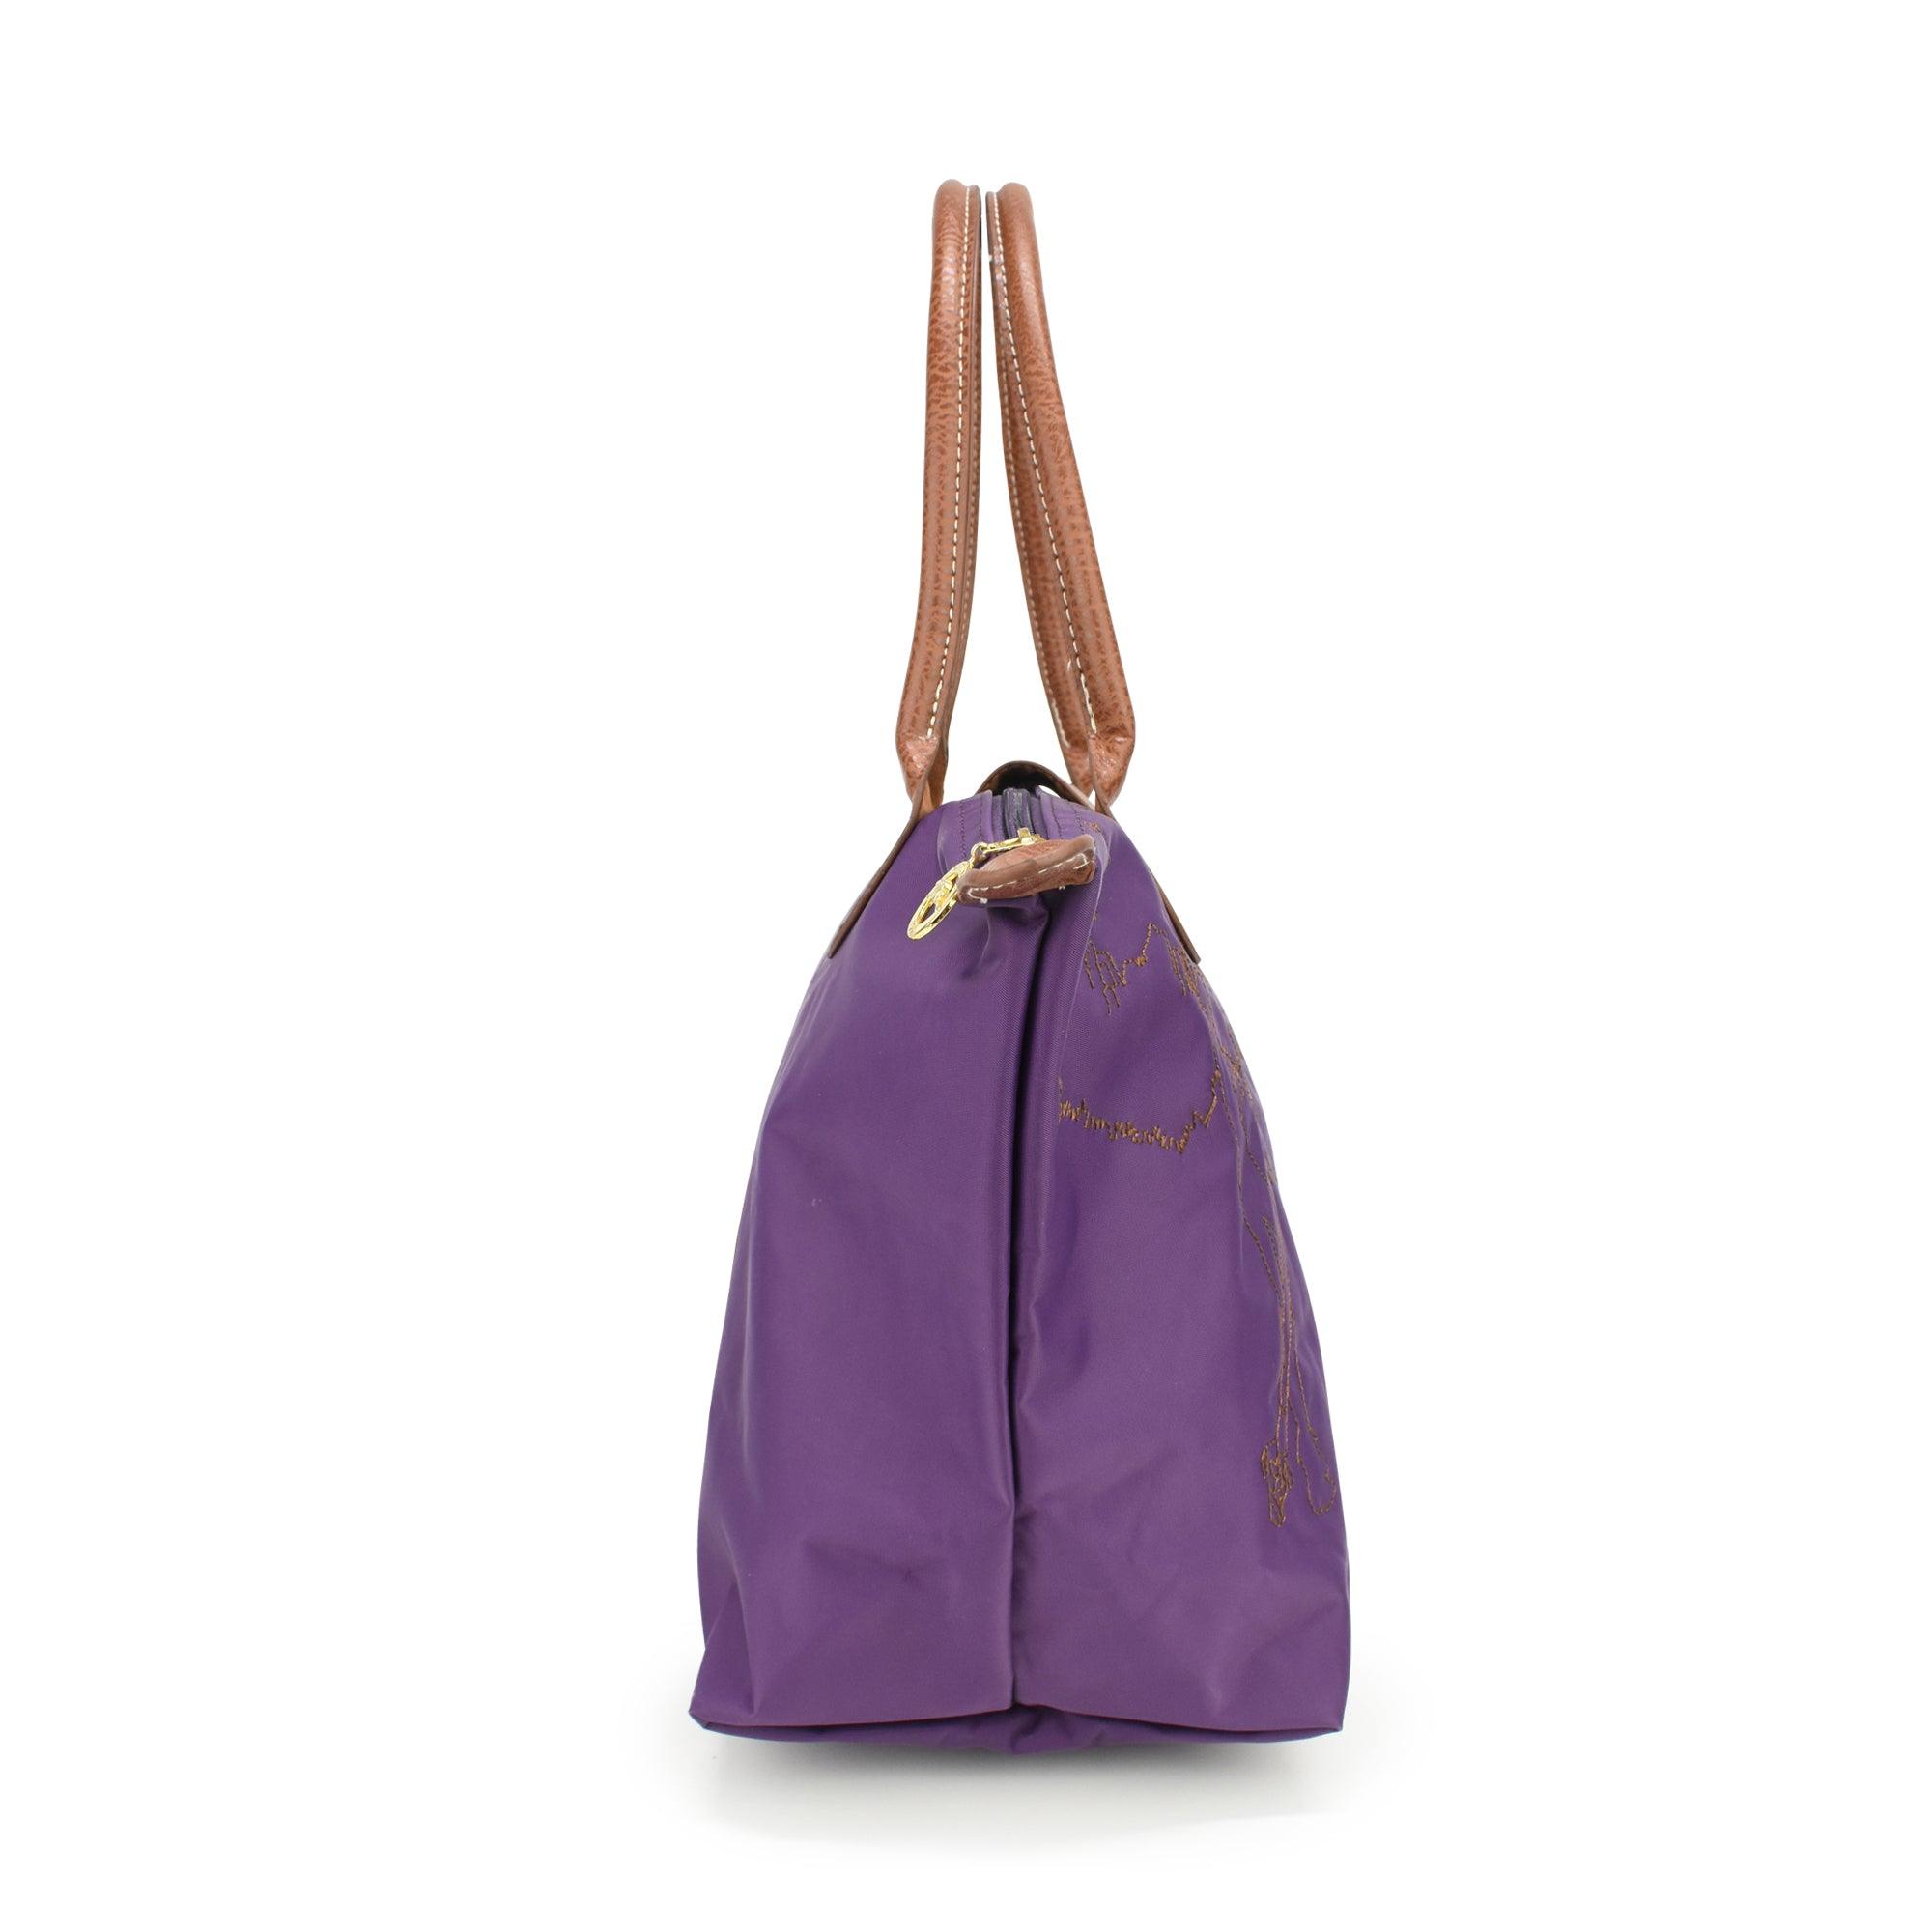 Longchamp 'Le Pliage' Tote Bag - Fashionably Yours